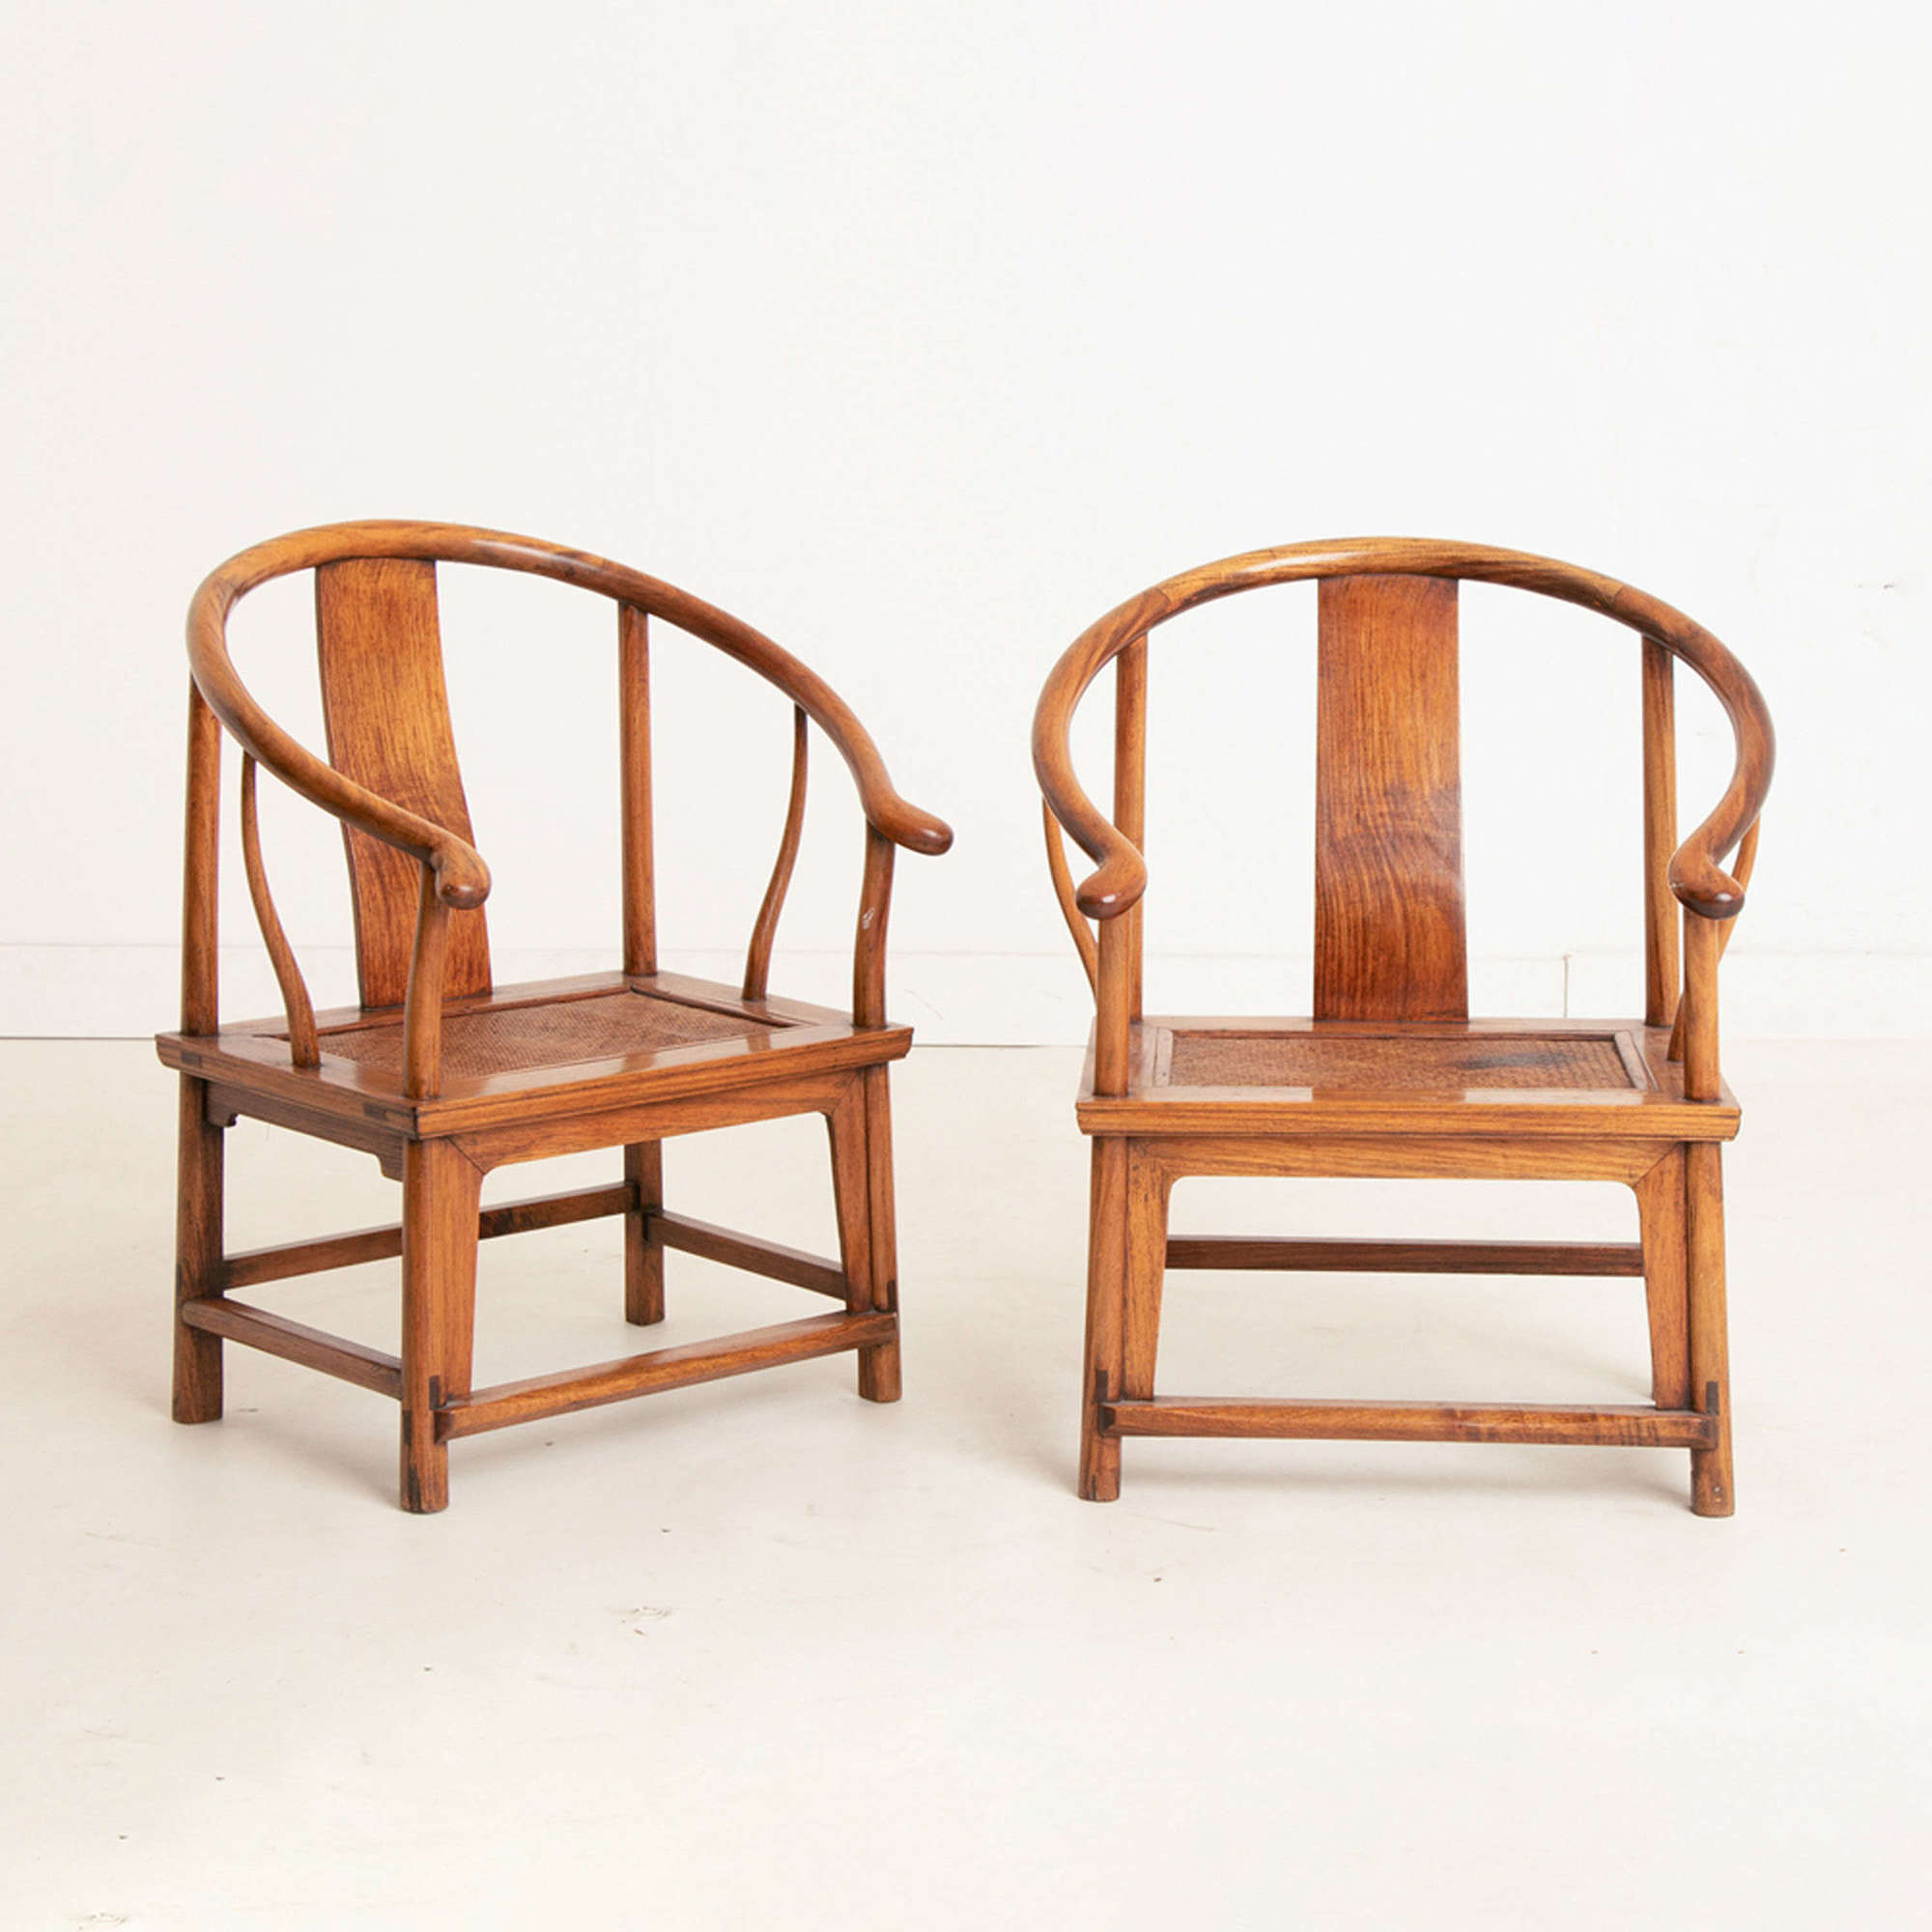 Pair of Small Chinese Chairs circa 1900-1920